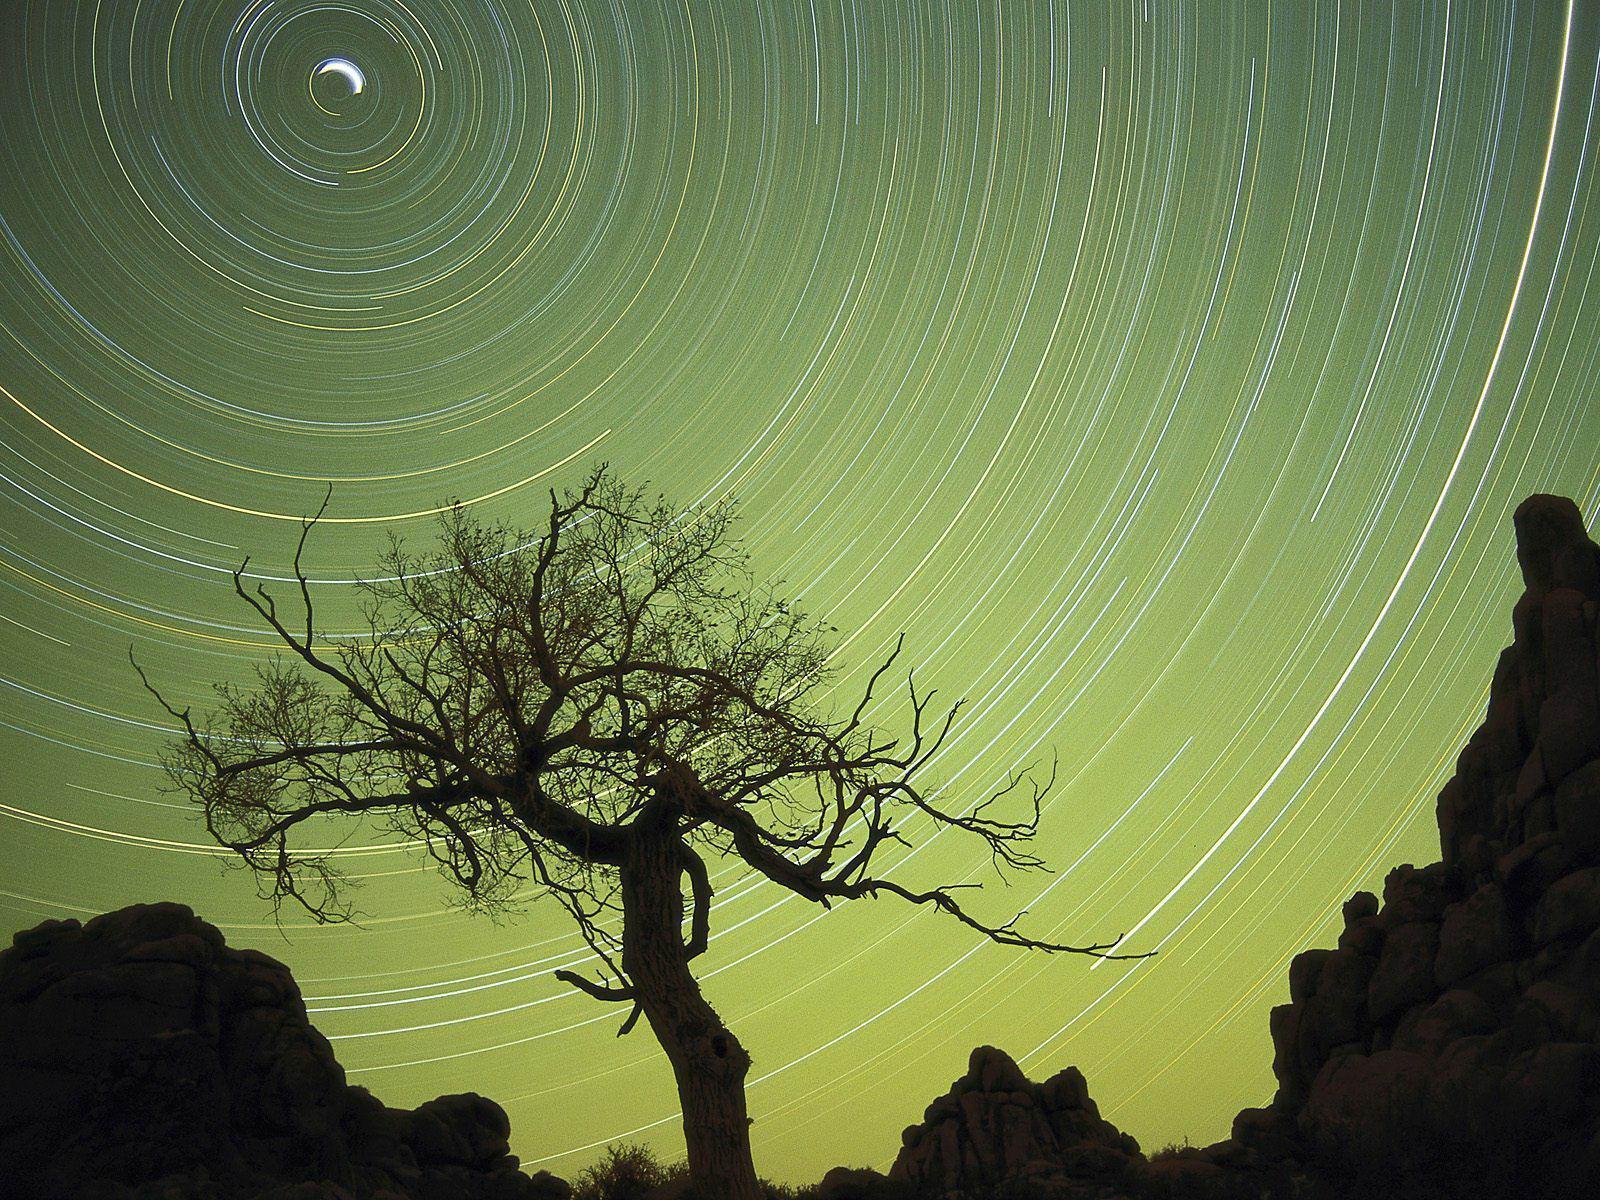 Star trails mongolia free desktop background wallpaper image